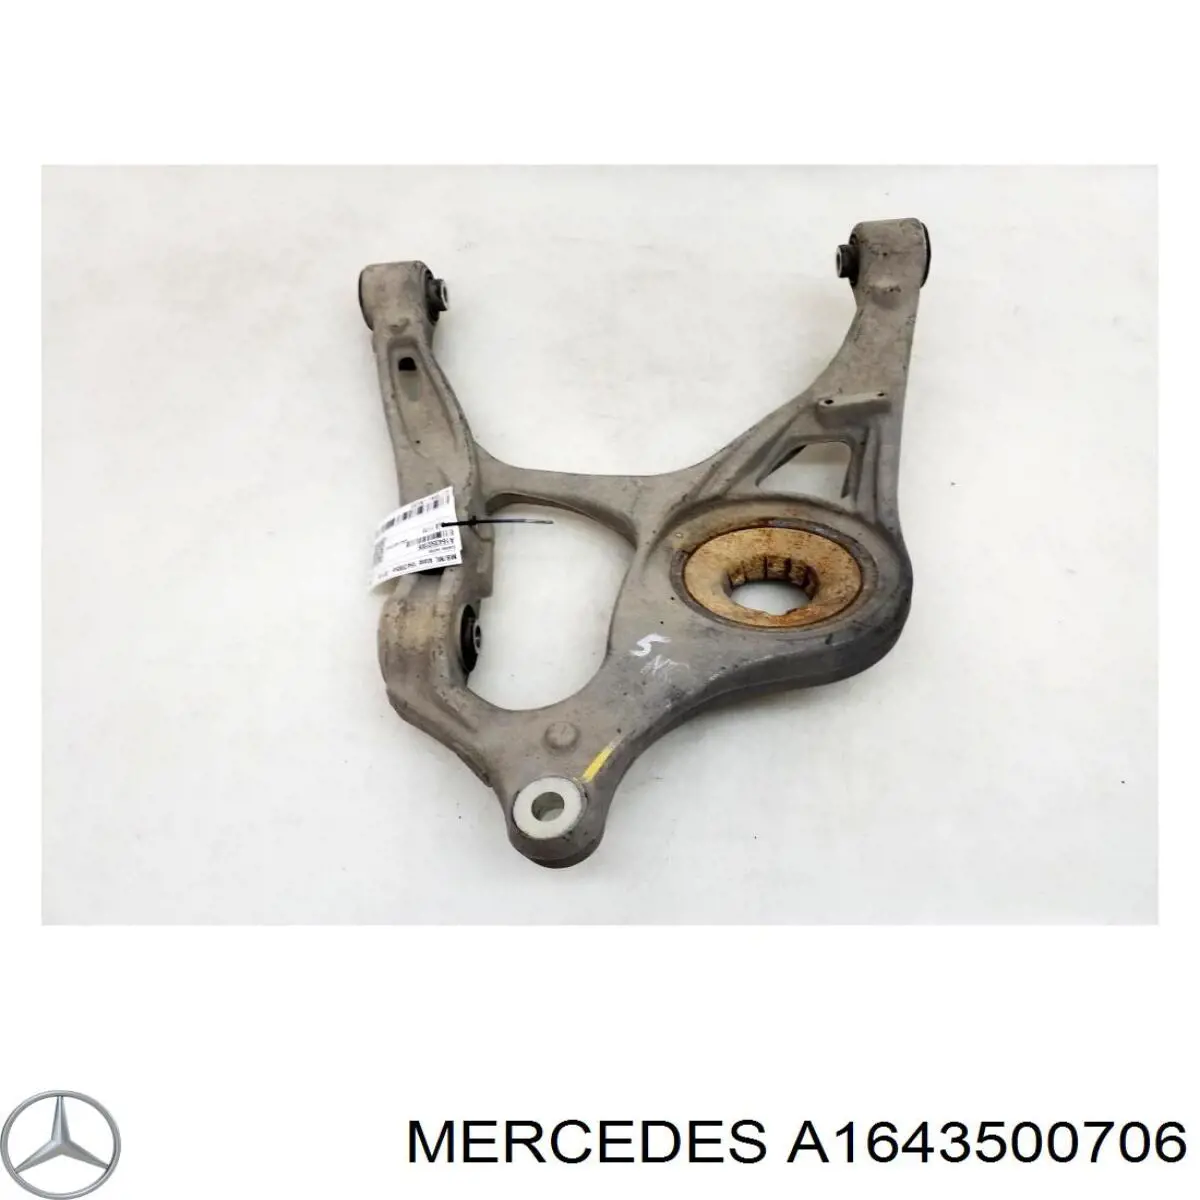 Brazo suspension (control) trasero inferior derecho para Mercedes ML/GLE (W164)